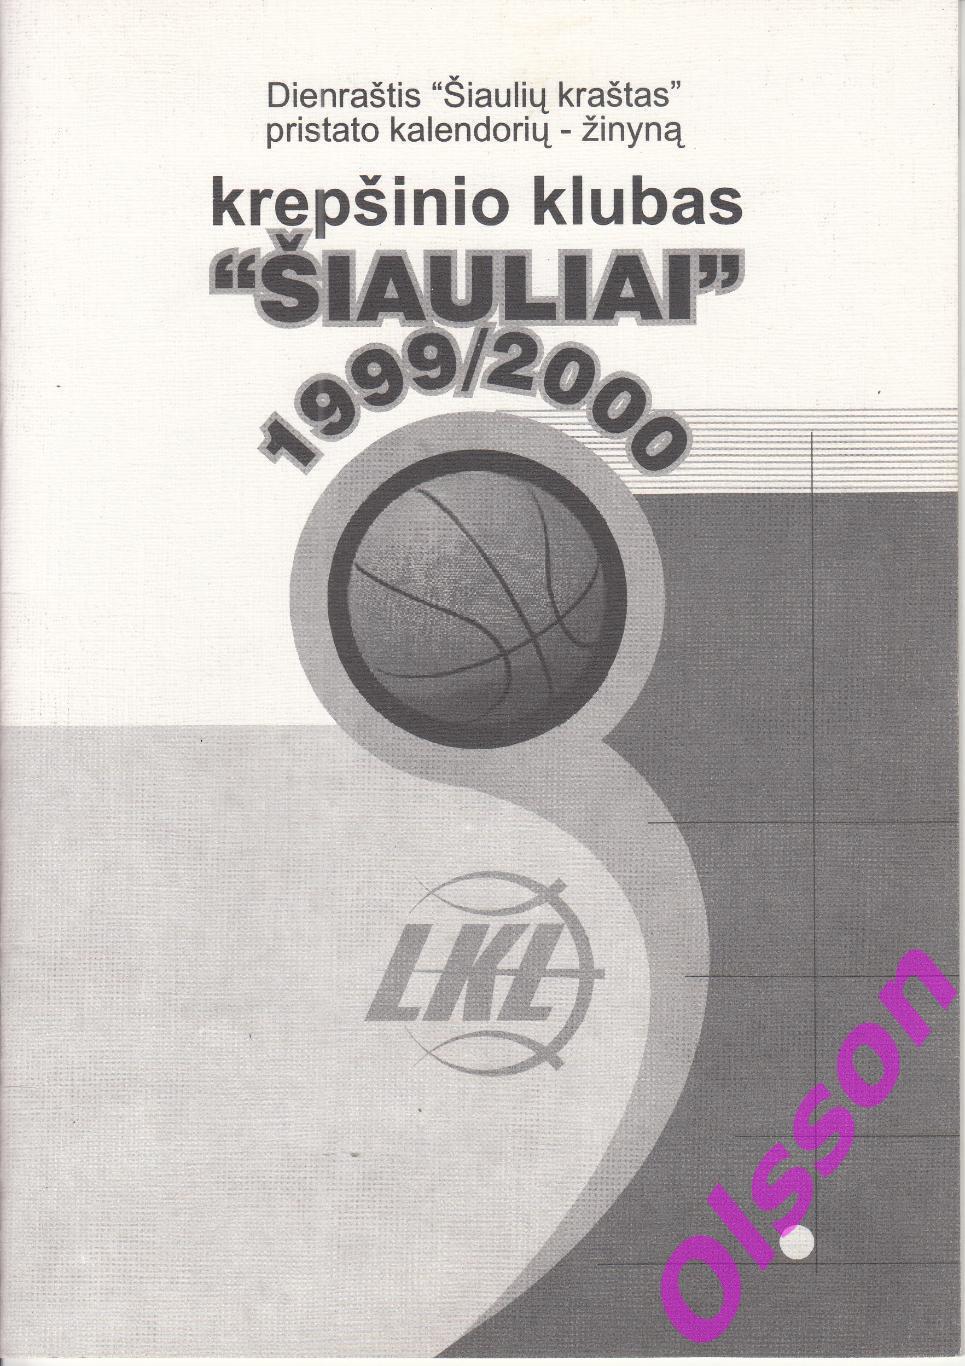 Баскетбол. Шауляй Литва - 1999/2000 20 стр.( см. описание)*